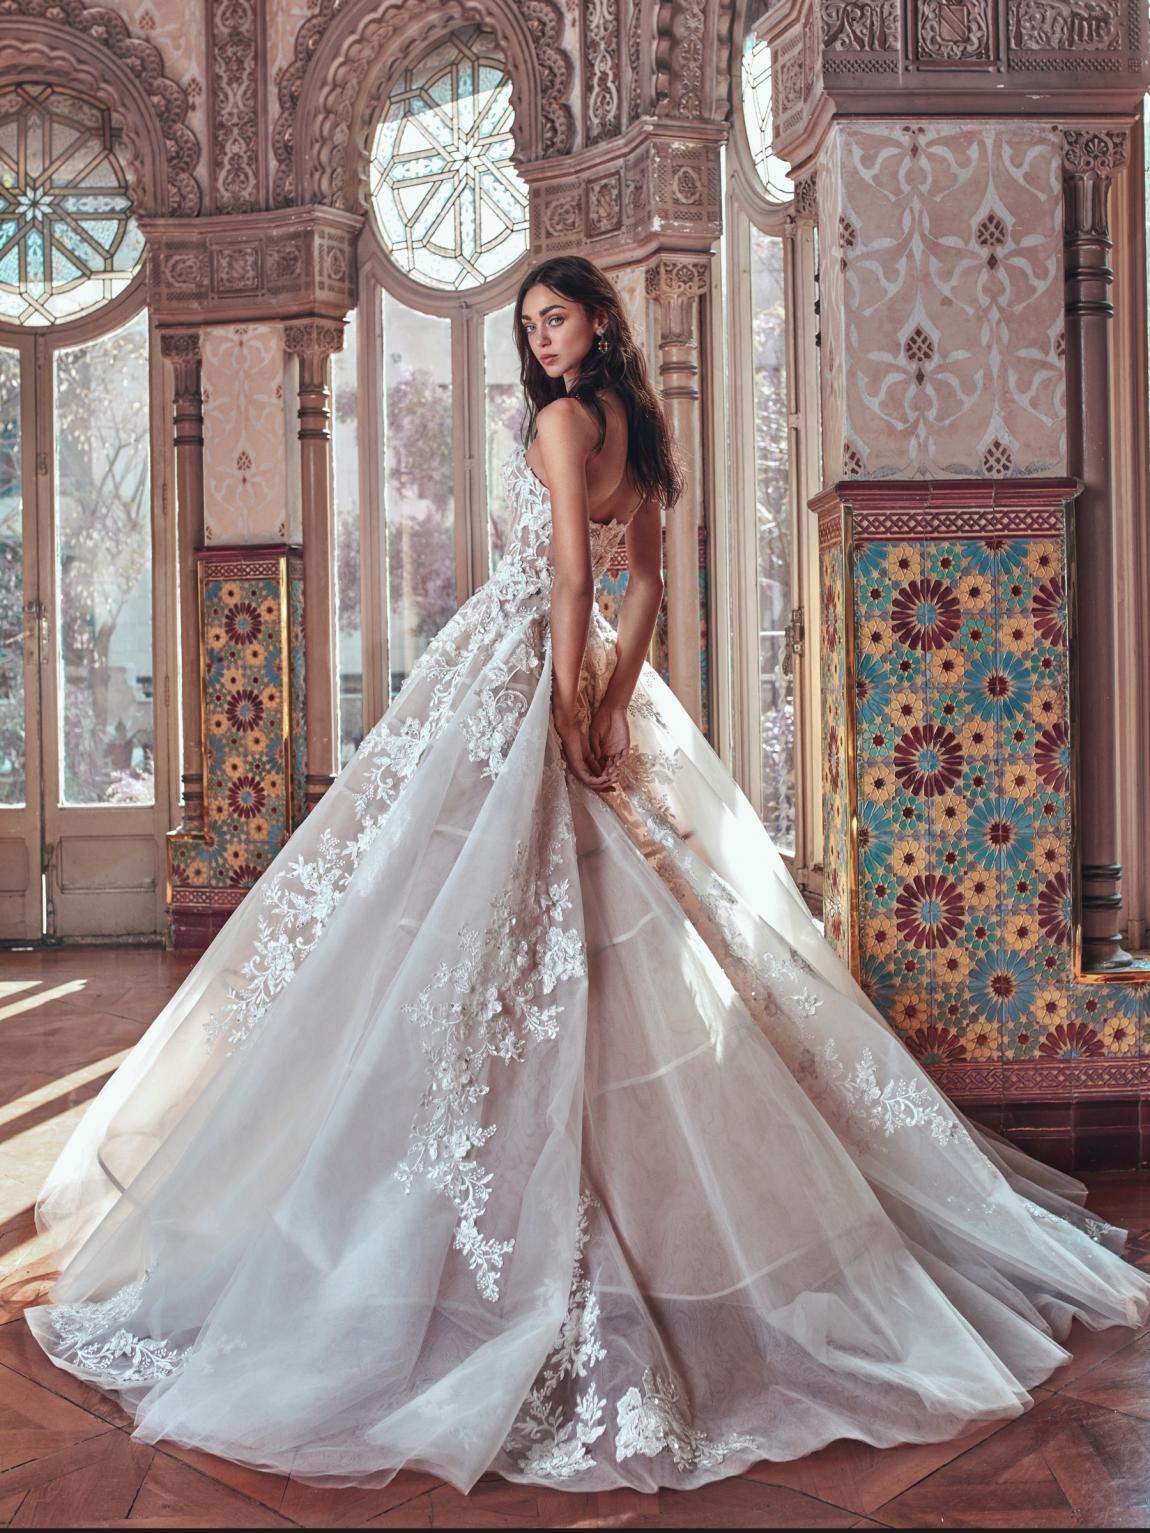 Luxury wedding dresses from Galia Lahav